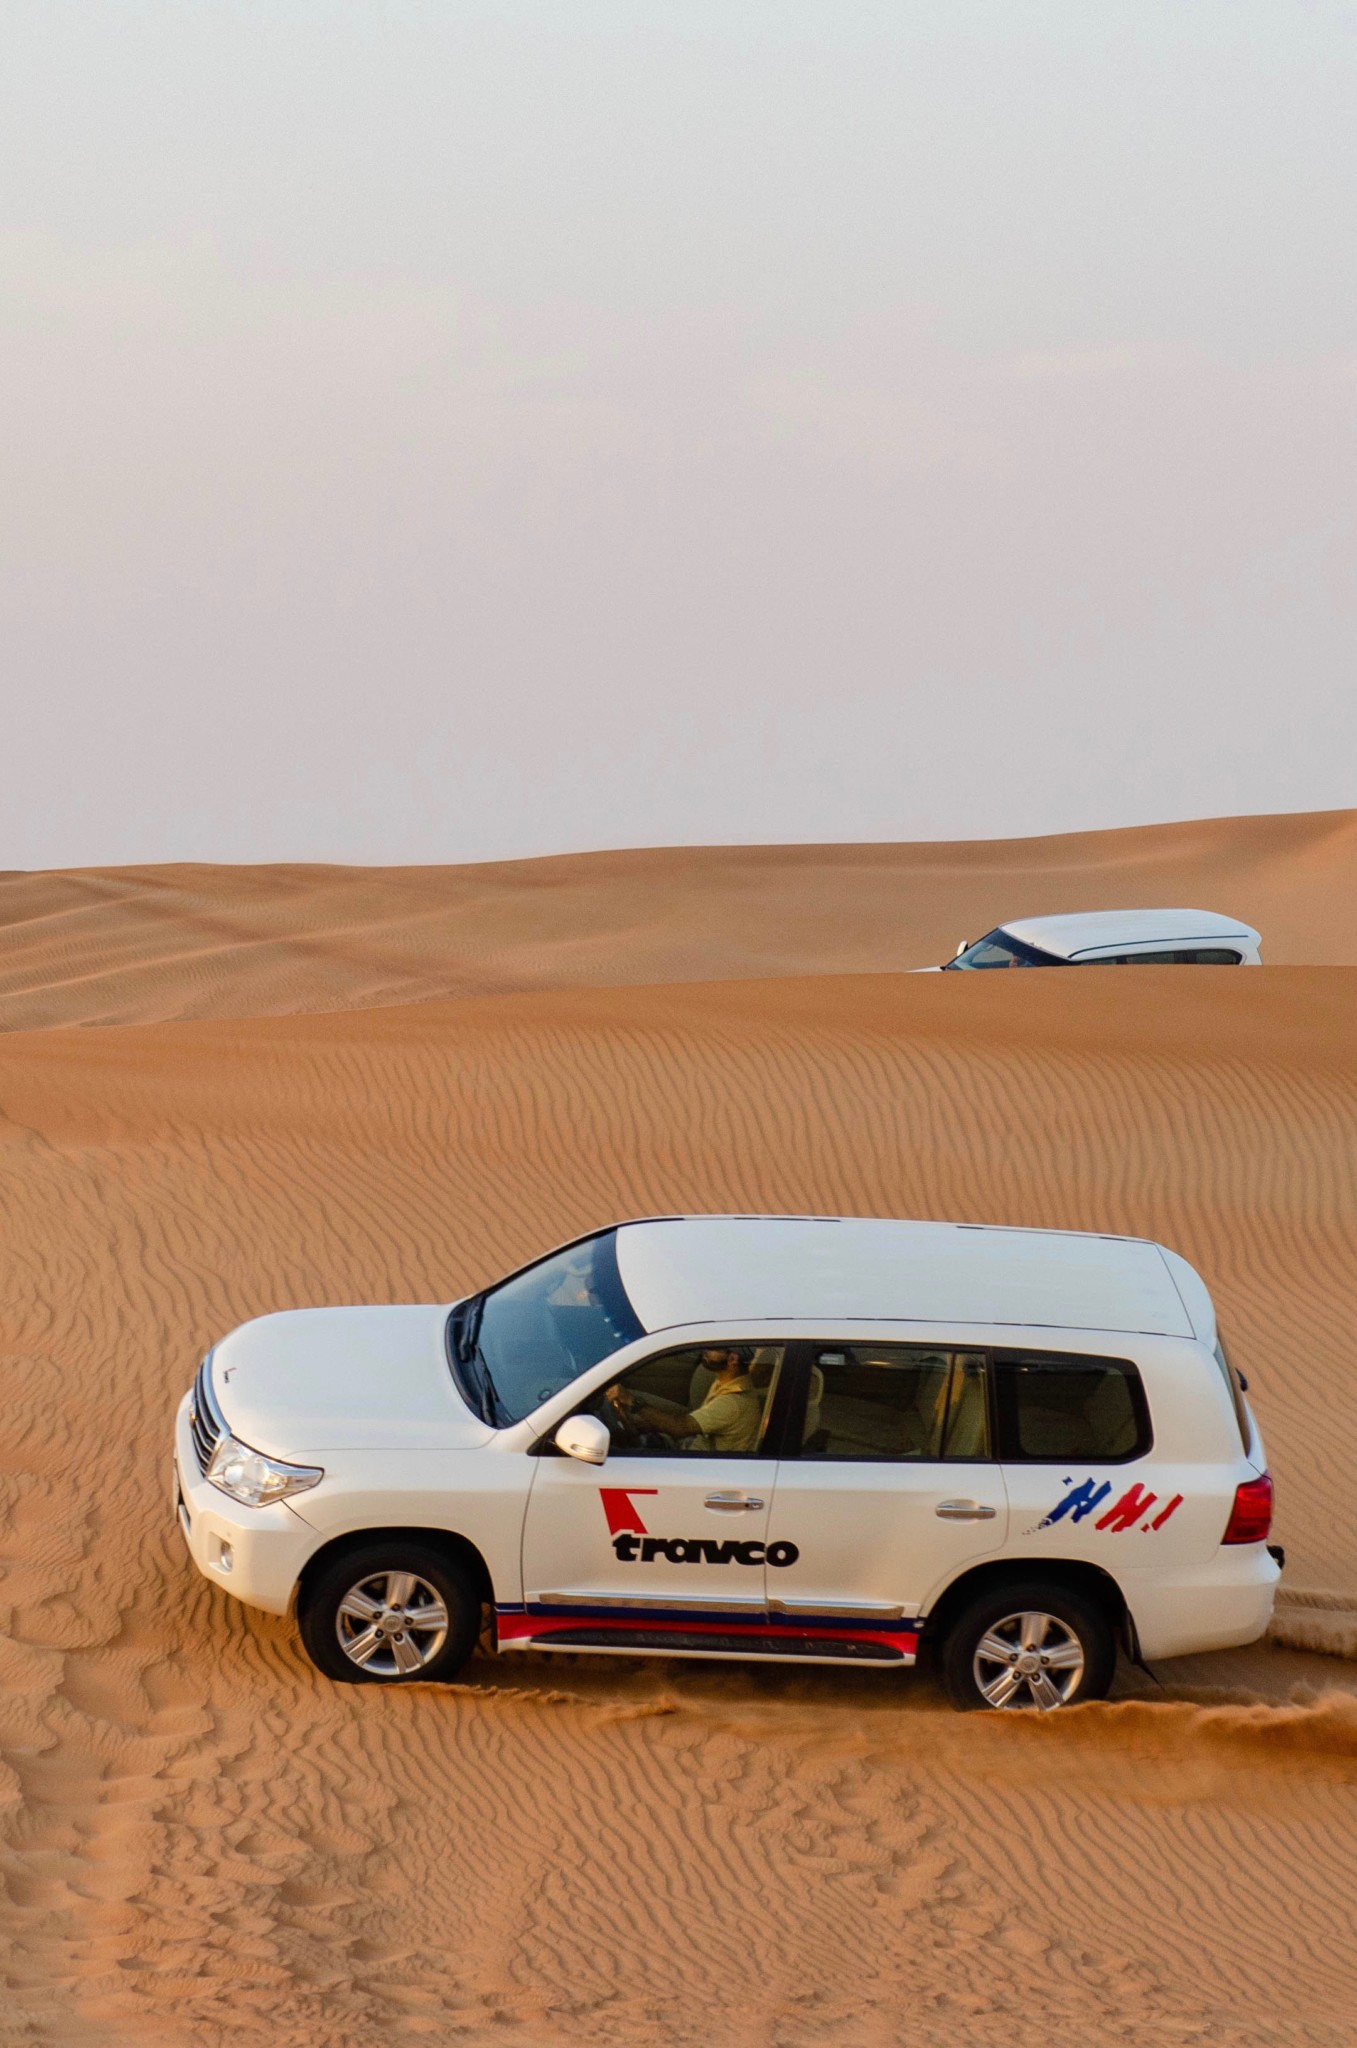 Jeepsafari in Dubai